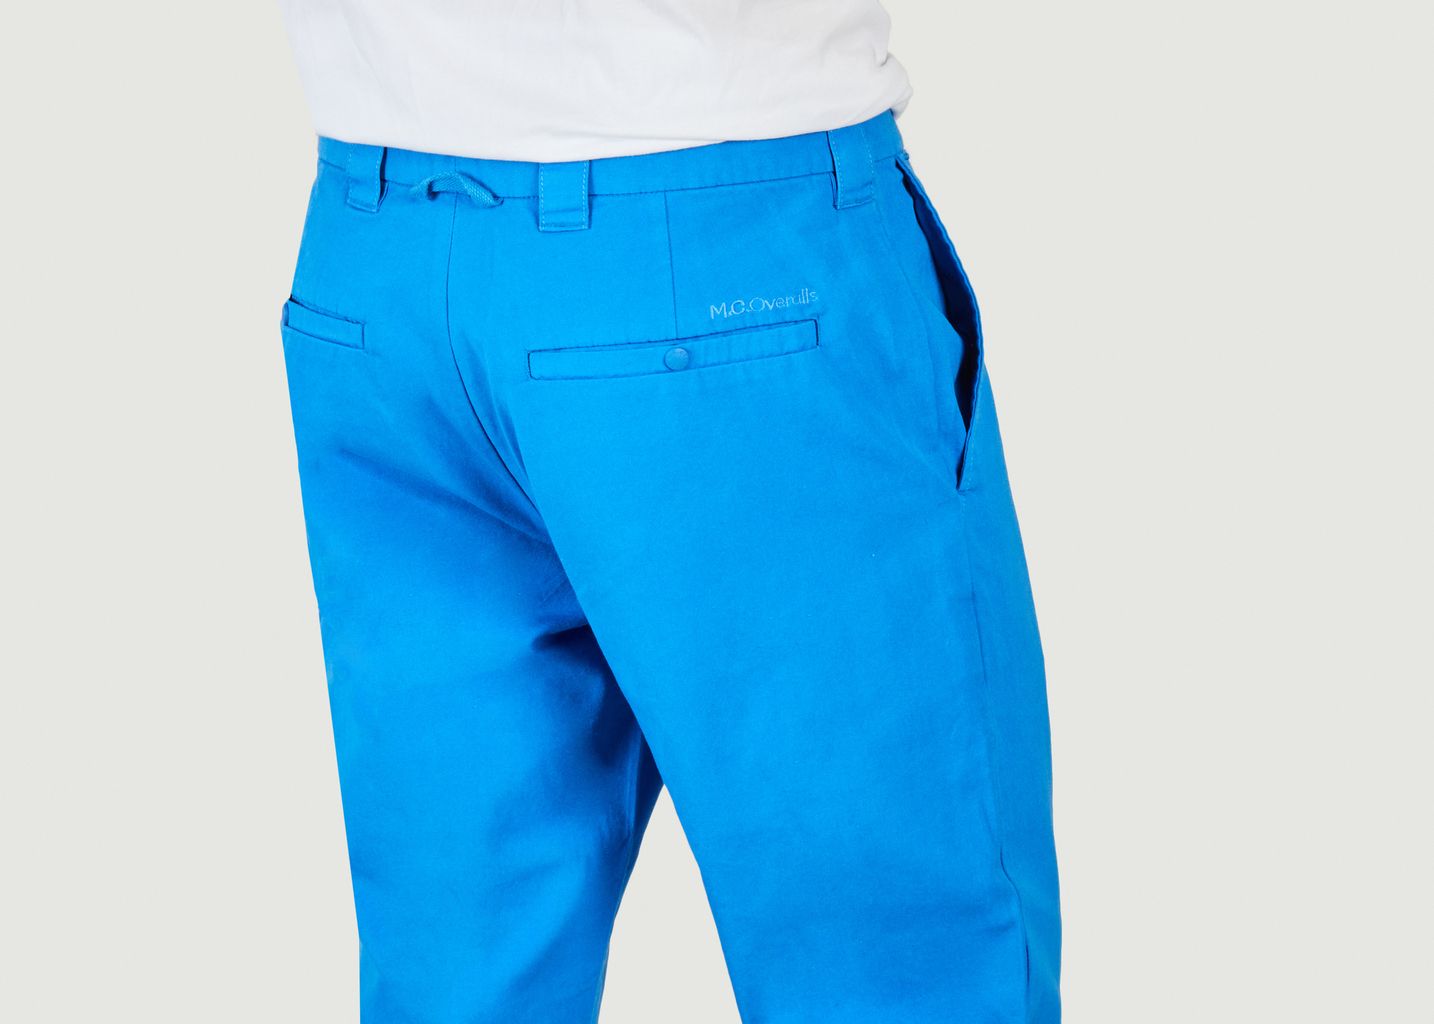 Work slim fit pants - M.C. Overalls